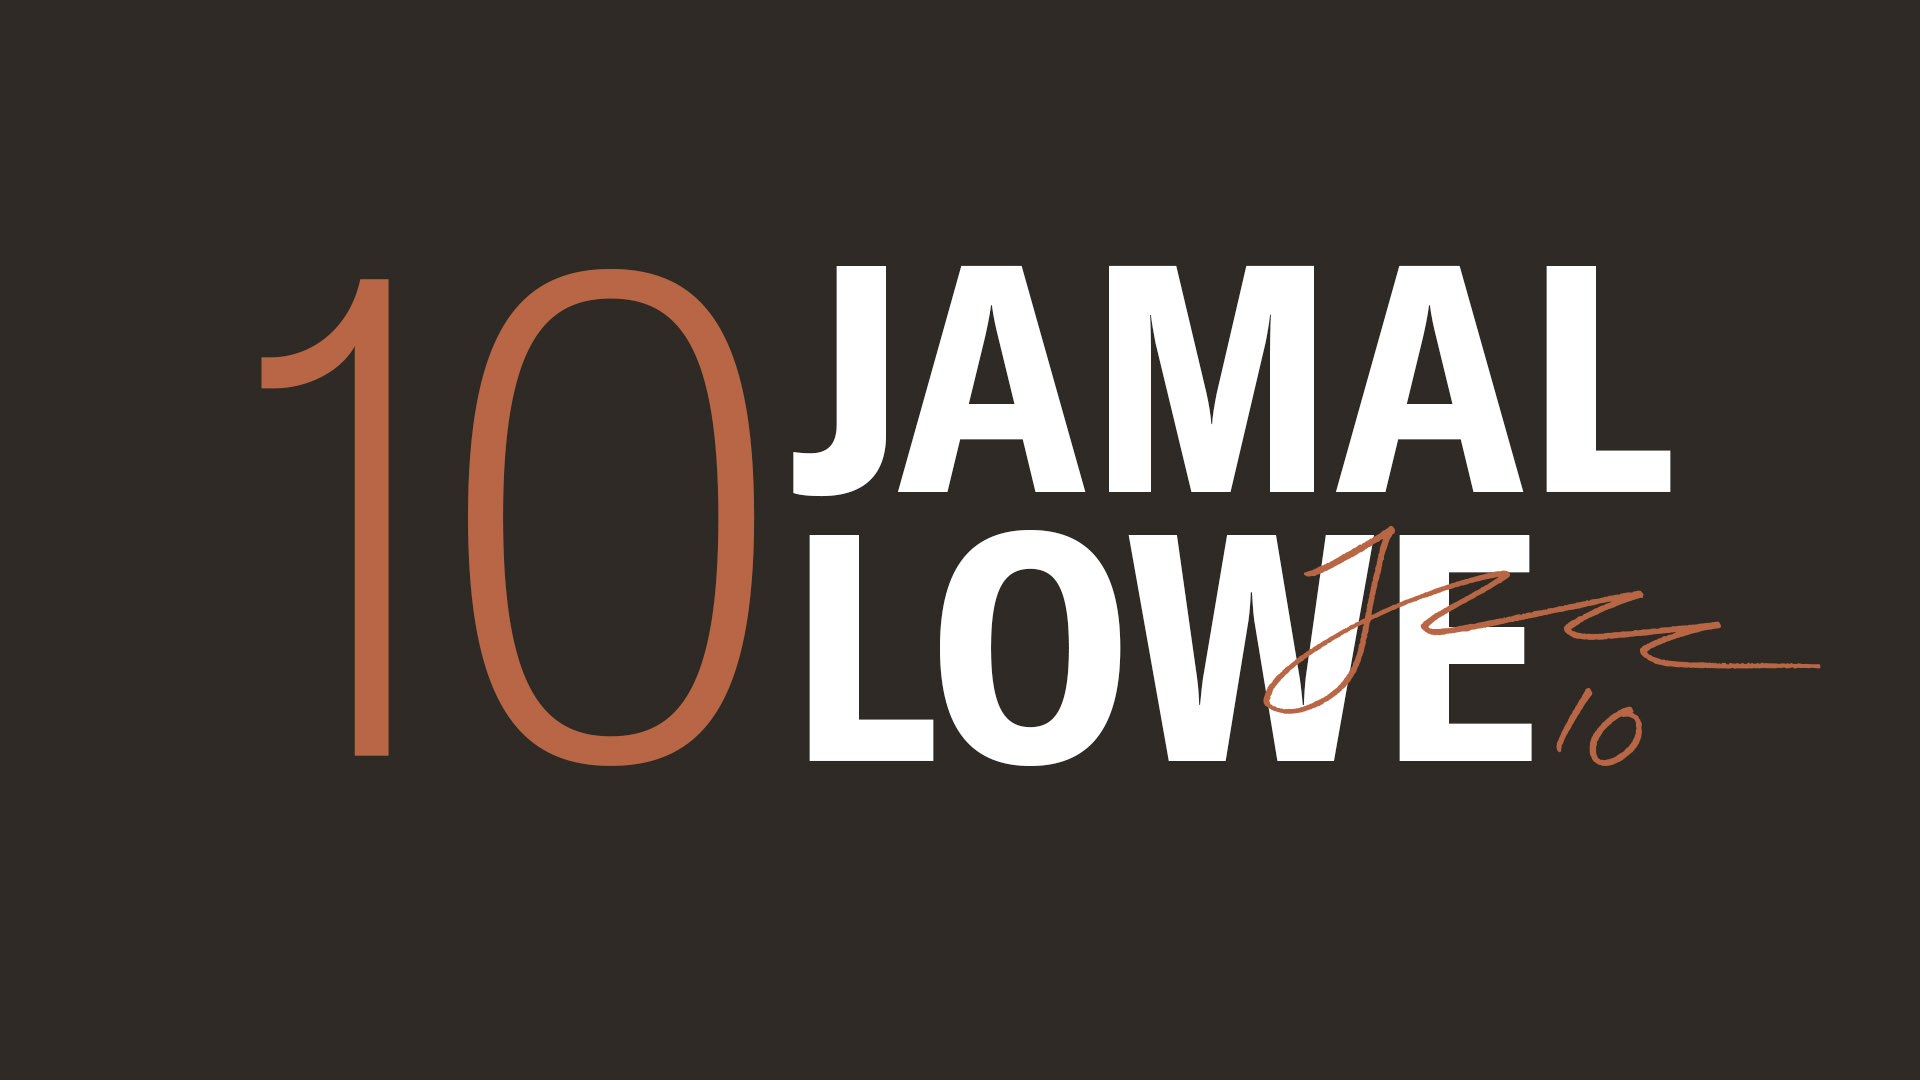 10 - Jamal Lowe